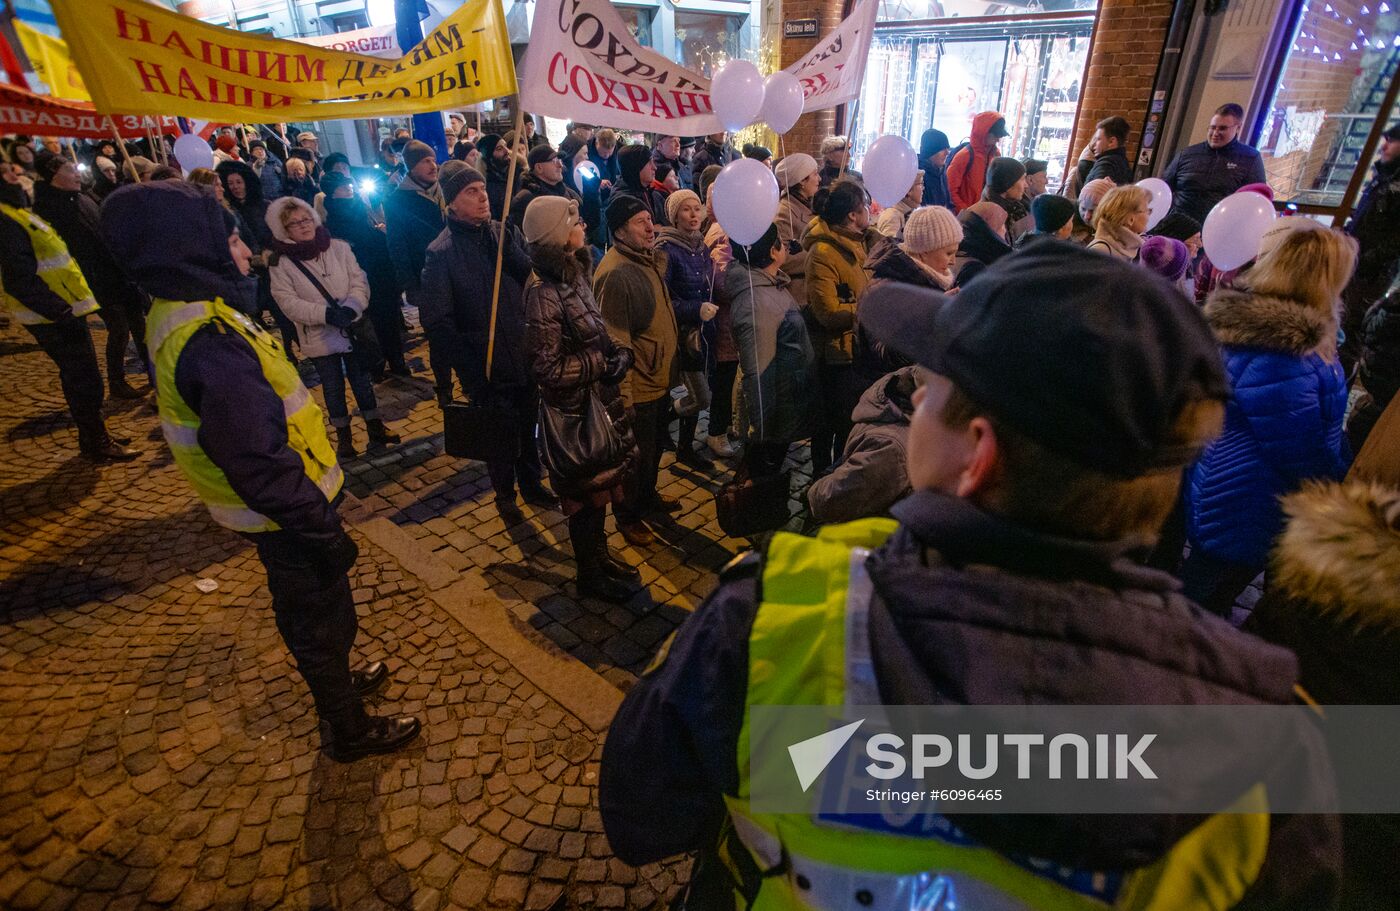 Latvia Language Reform Protest